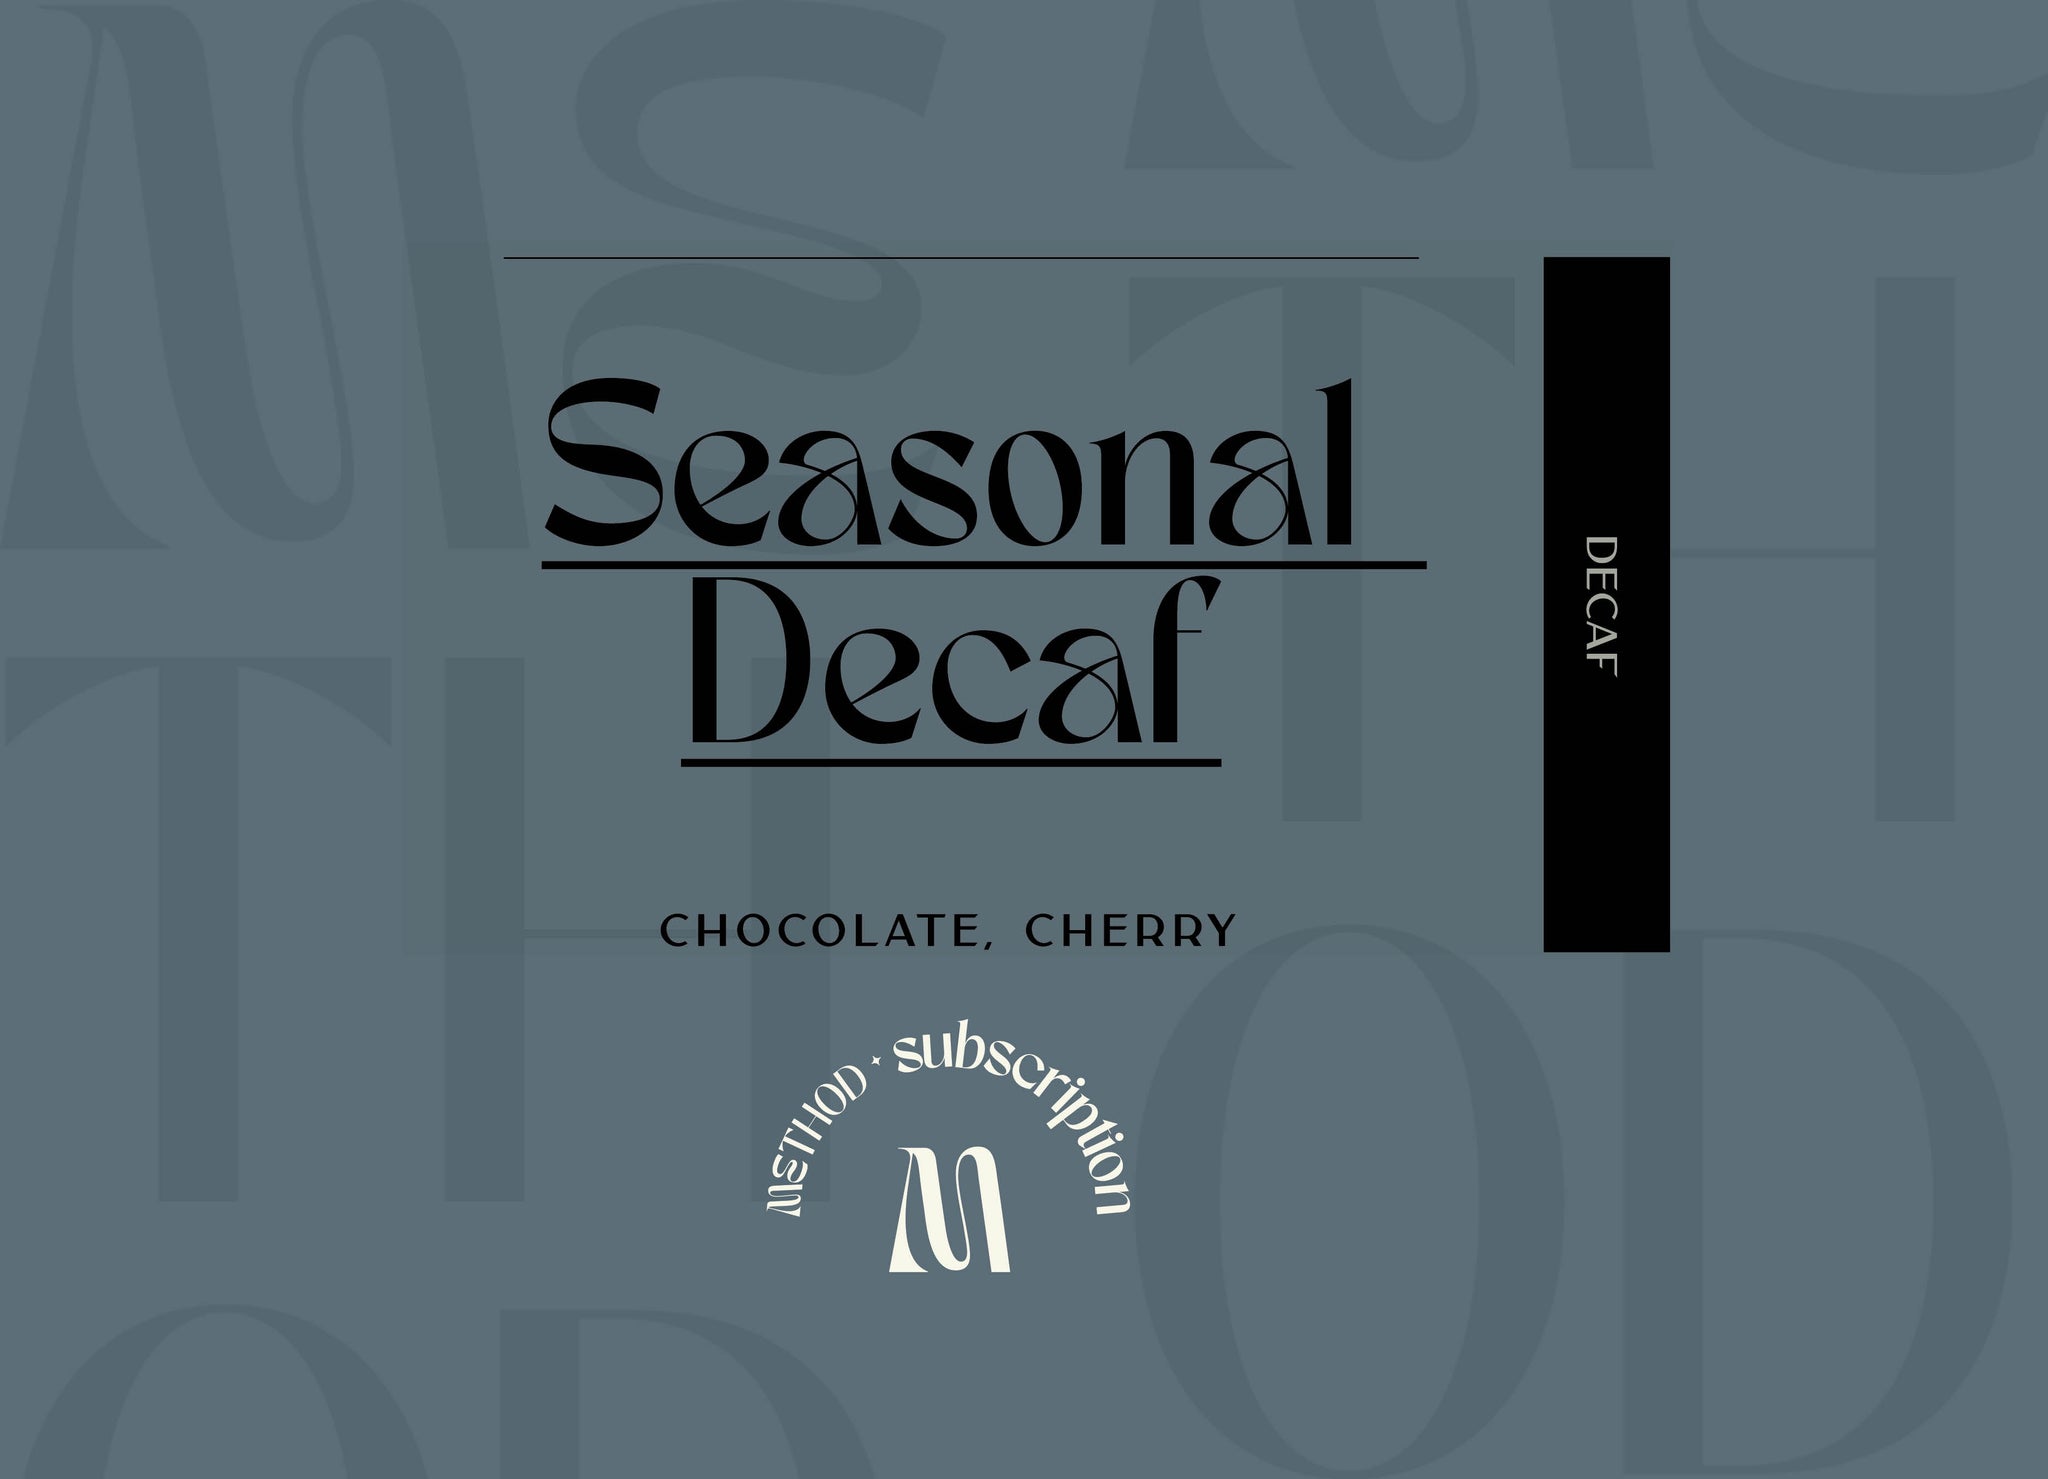 Seasonal DECAF - 12 months subscription